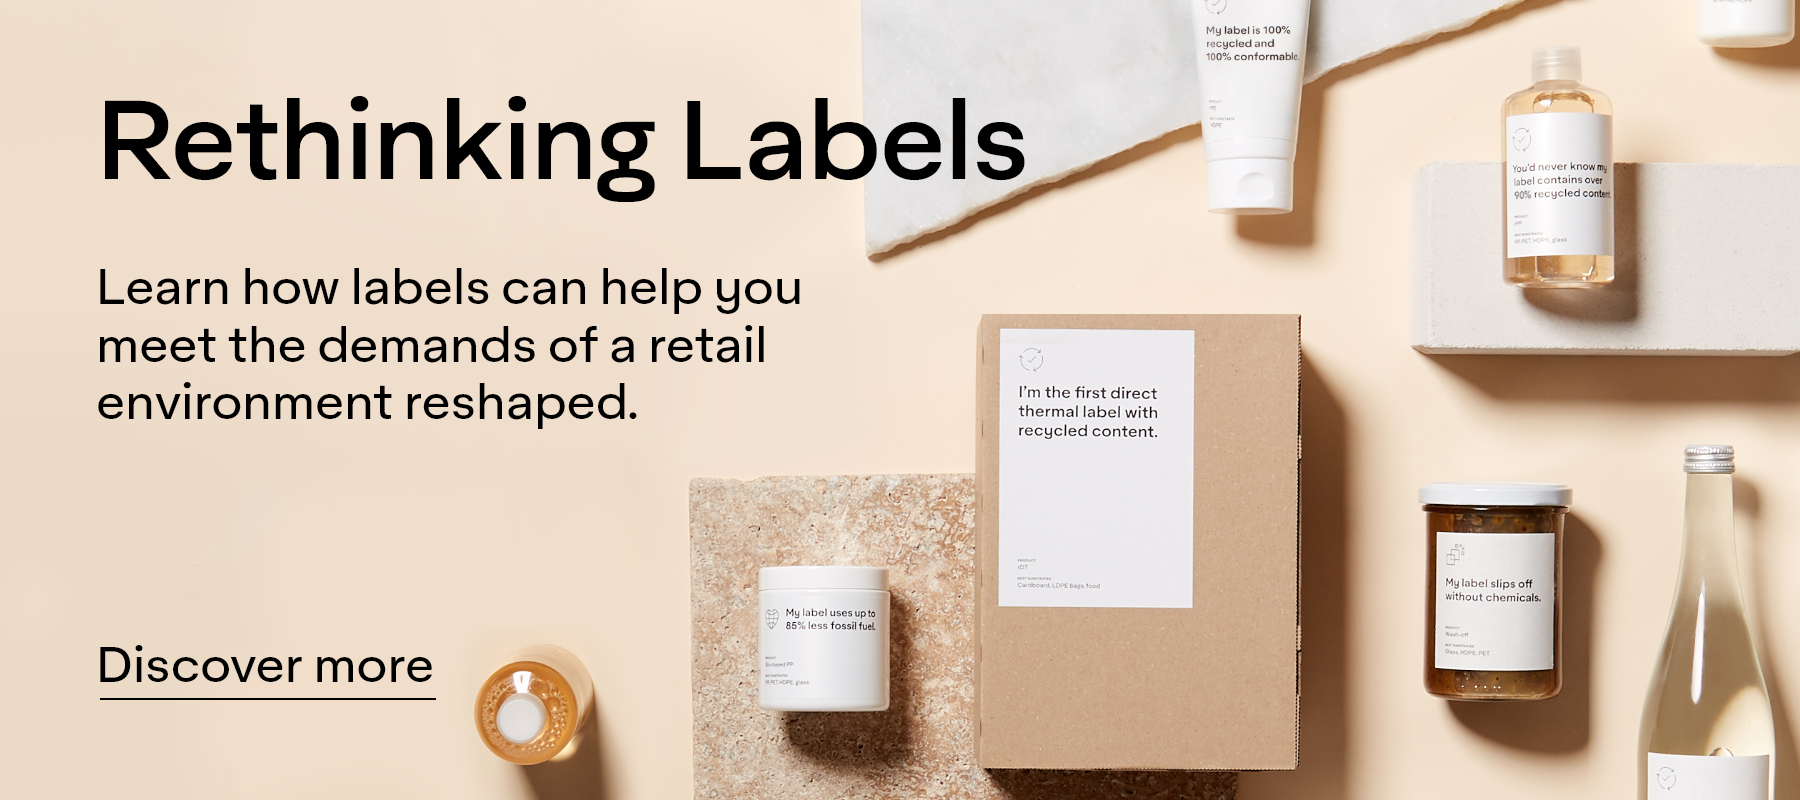 Rethinking Labels